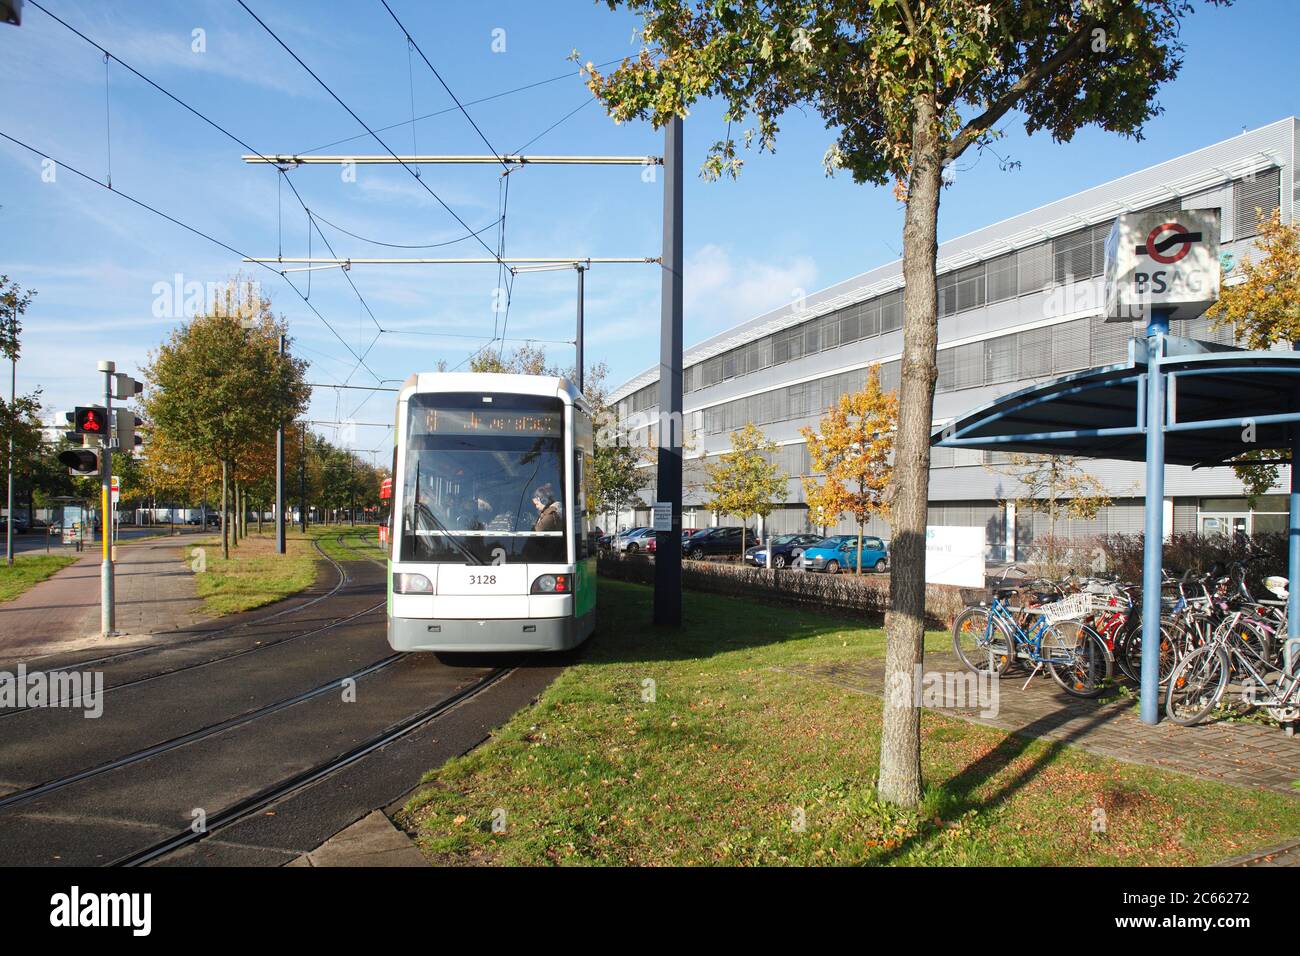 Tram, Siemens Building, Technology Centre, Technology Park, Bremen, Germany, Europe Stock Photo